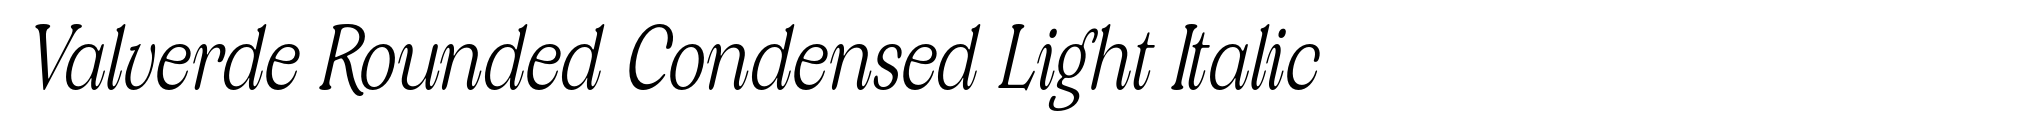 Valverde Rounded Condensed Light Italic image